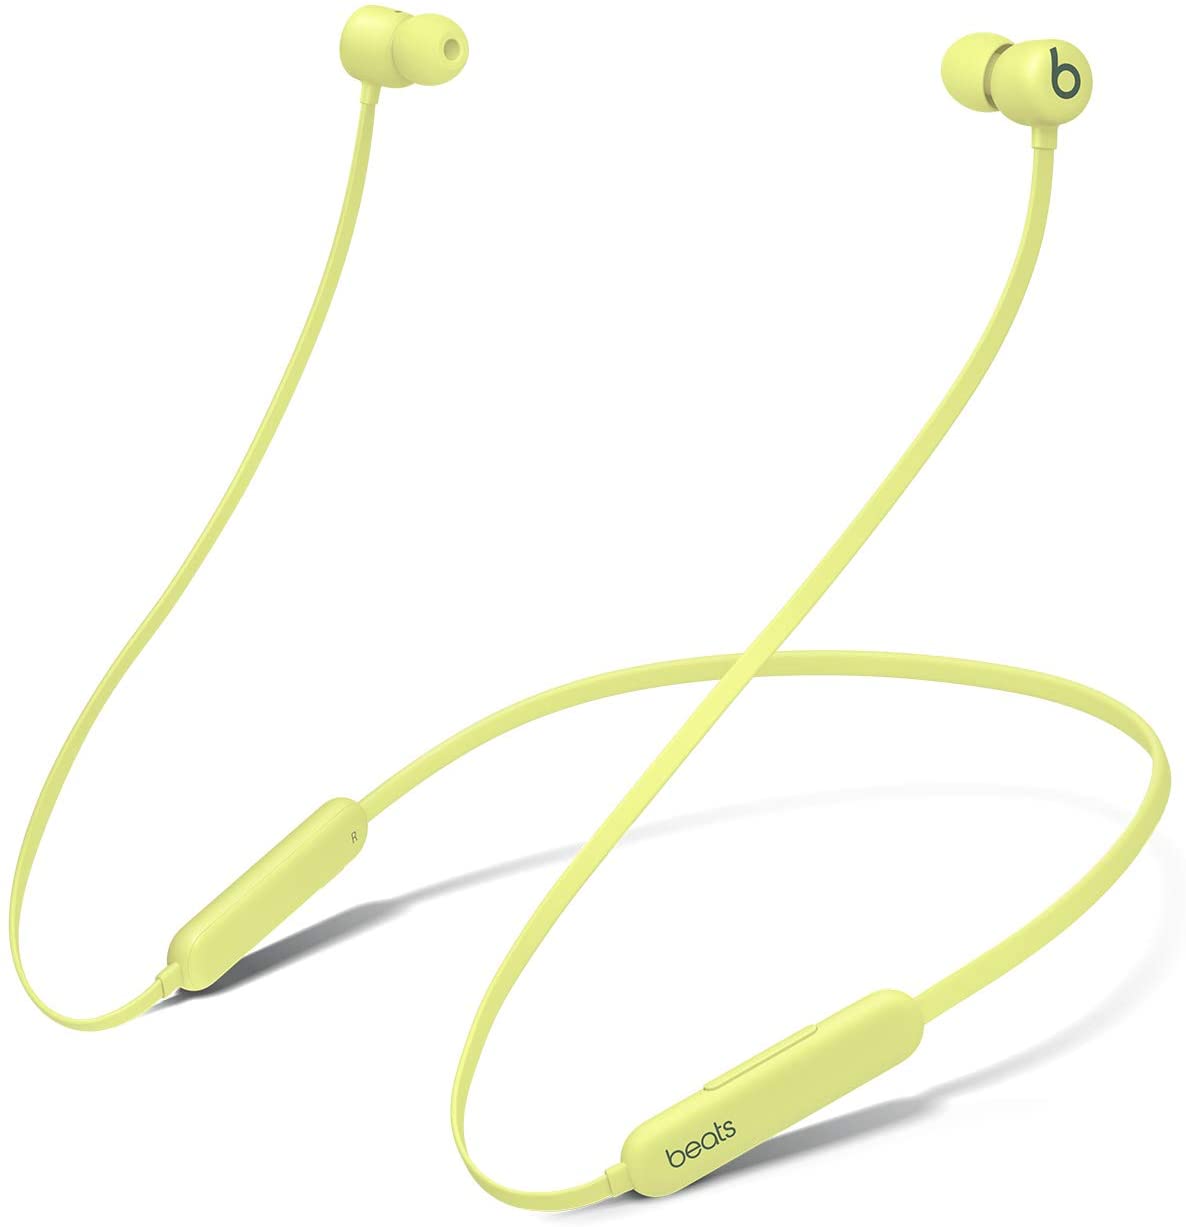 Beats Flex Wireless Portable Bluetooth Earbuds Built-in Microphone - Yuzu Yellow